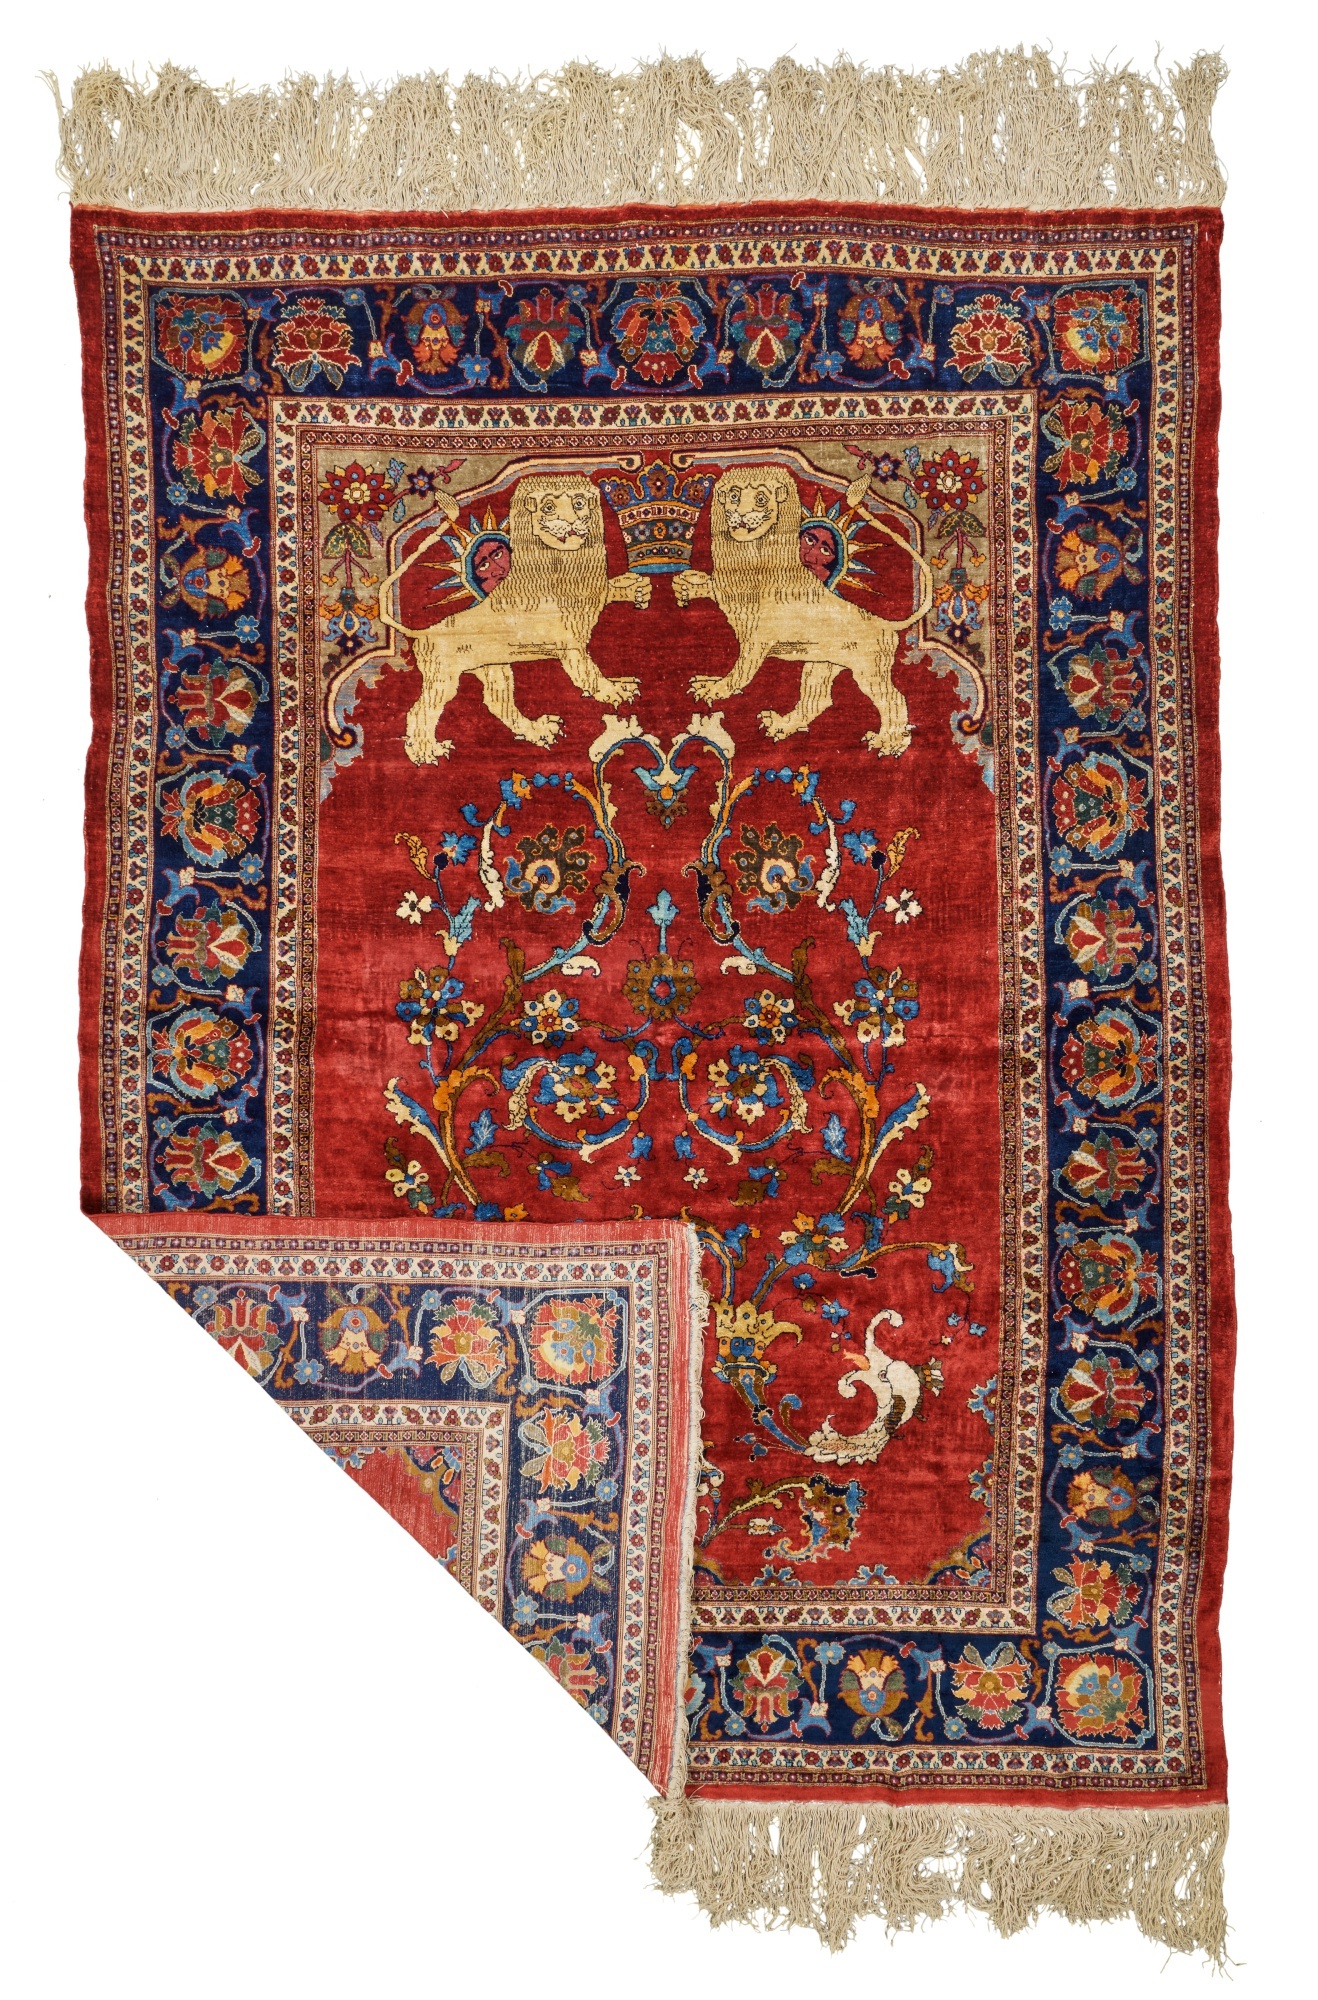 A Senna Silk Prayer Rug, Northwest Persia, Circa 1890 - Image 2 of 3